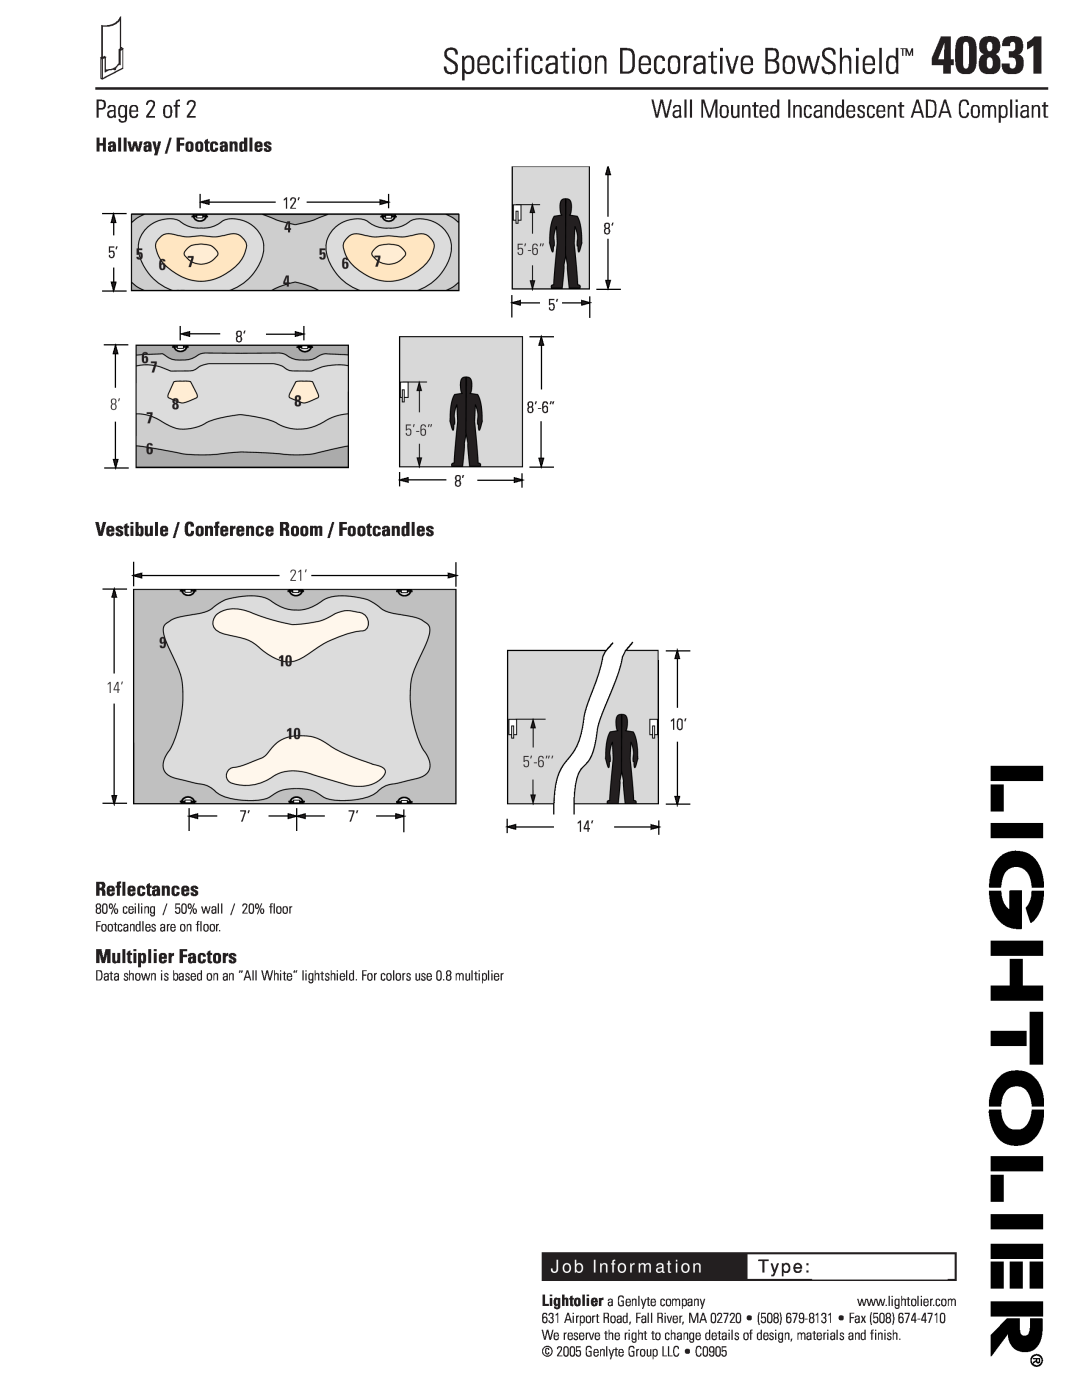 Lightolier 40831 Page 2 of, Hallway / Footcandles, Vestibule / Conference Room / Footcandles, Reflectances, Type, 5’-6” 